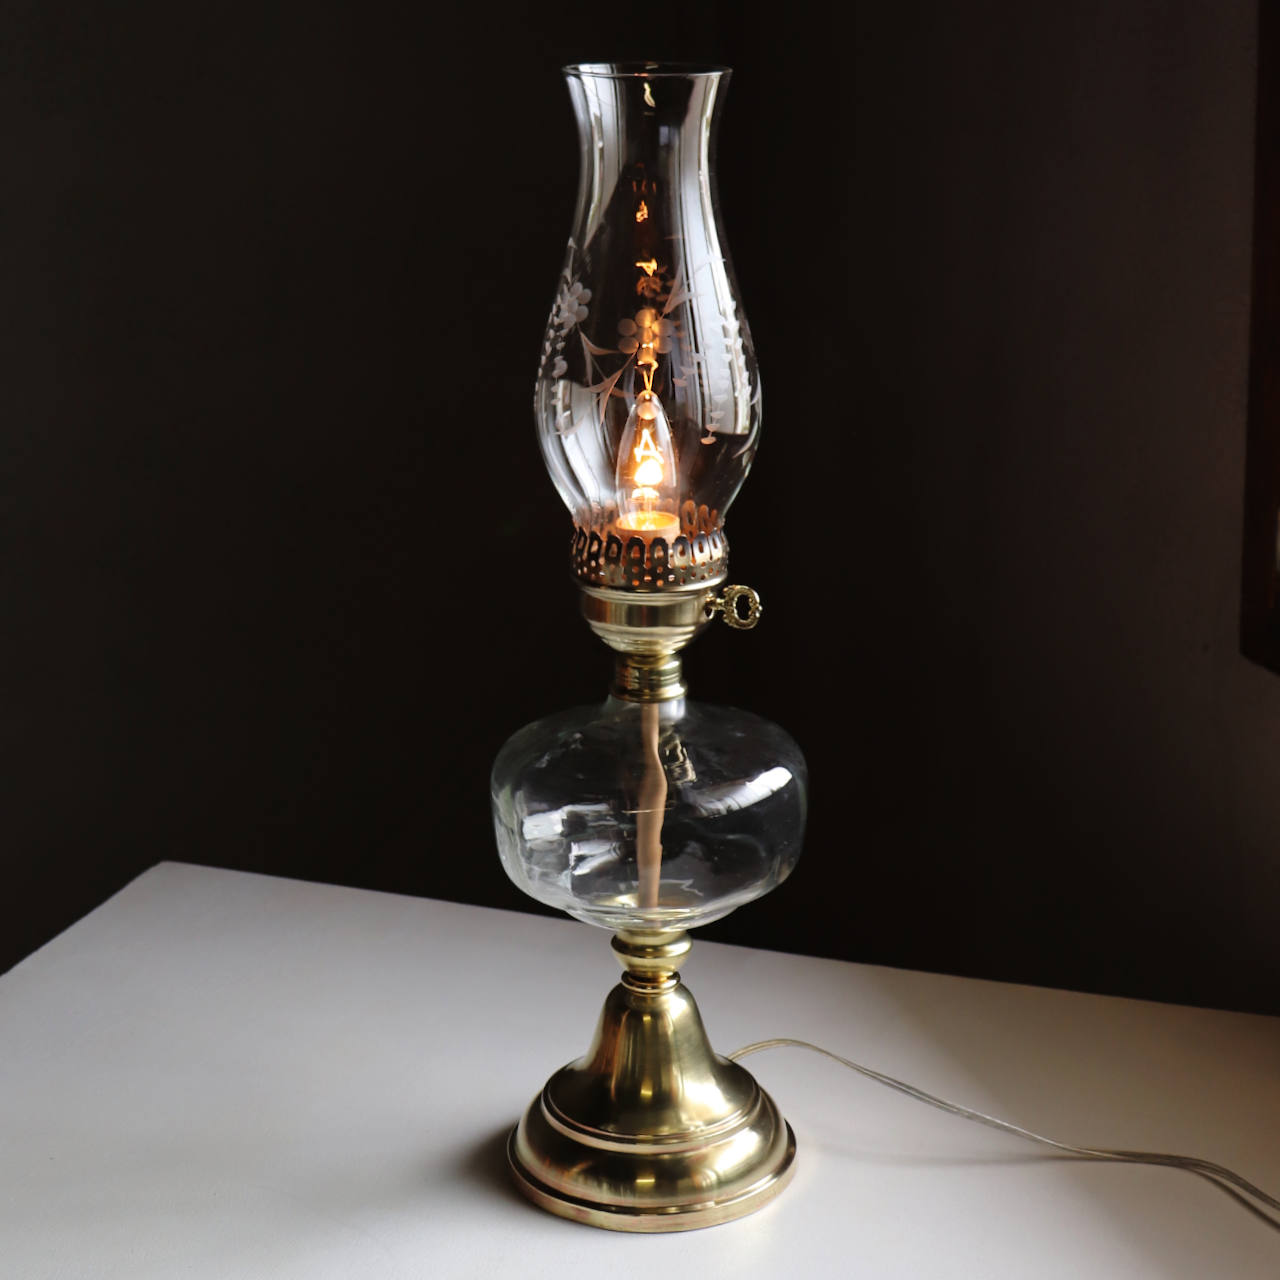 USAヴィンテージオイルランプスタイルテーブルライト｜エッチンググラスチムニーアンティーク卓上照明